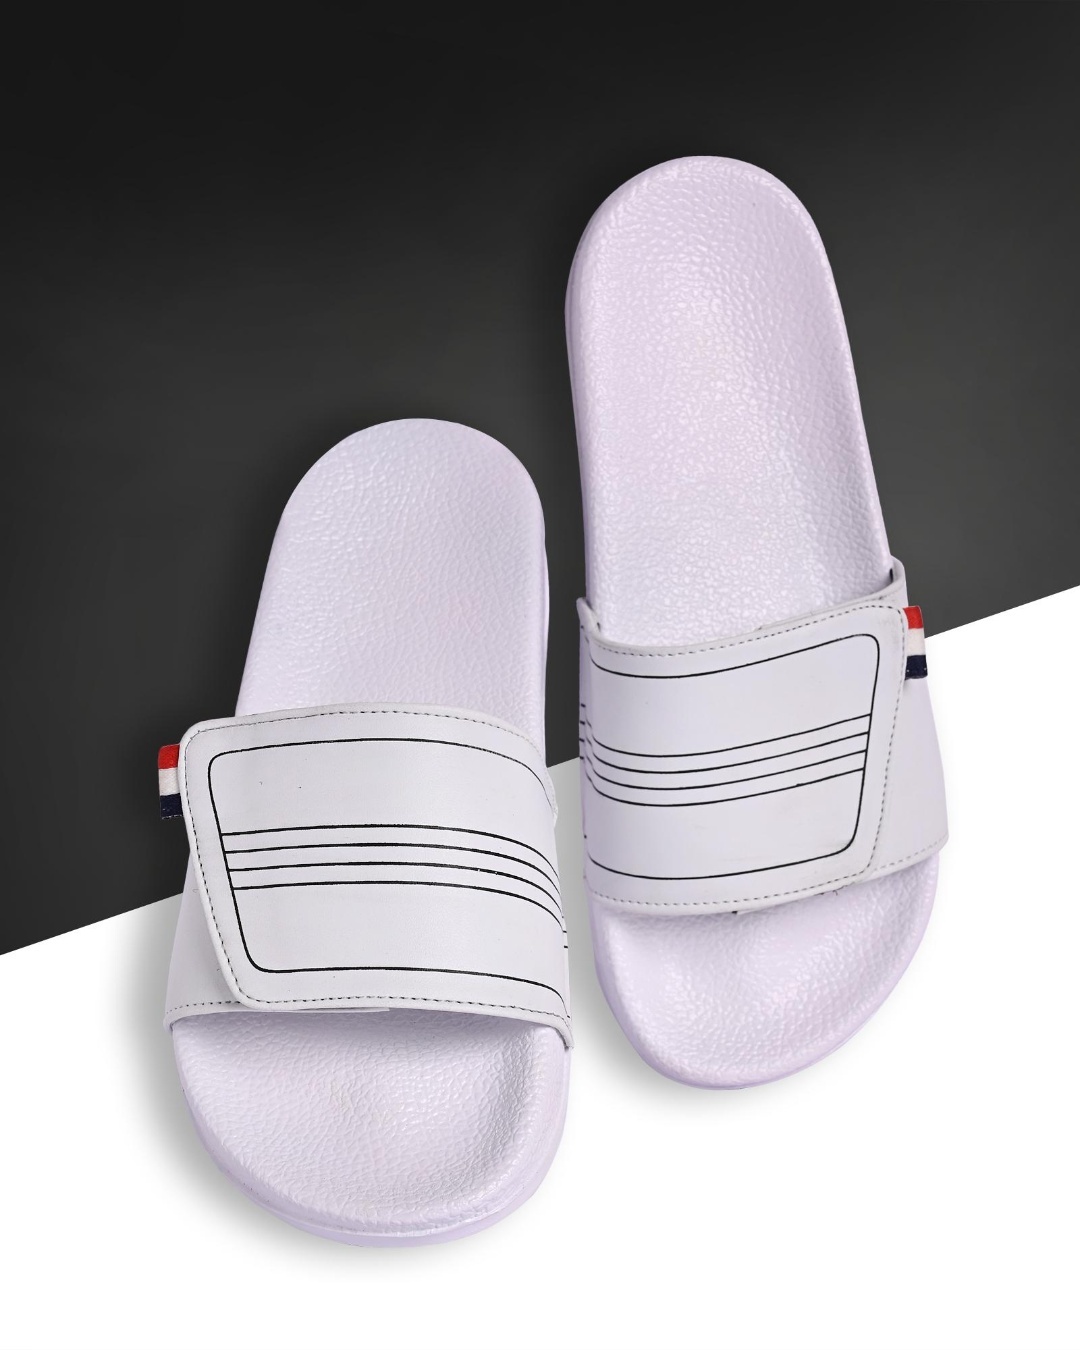 Buy Men's White Printed Velcro Sliders Online in India at Bewakoof